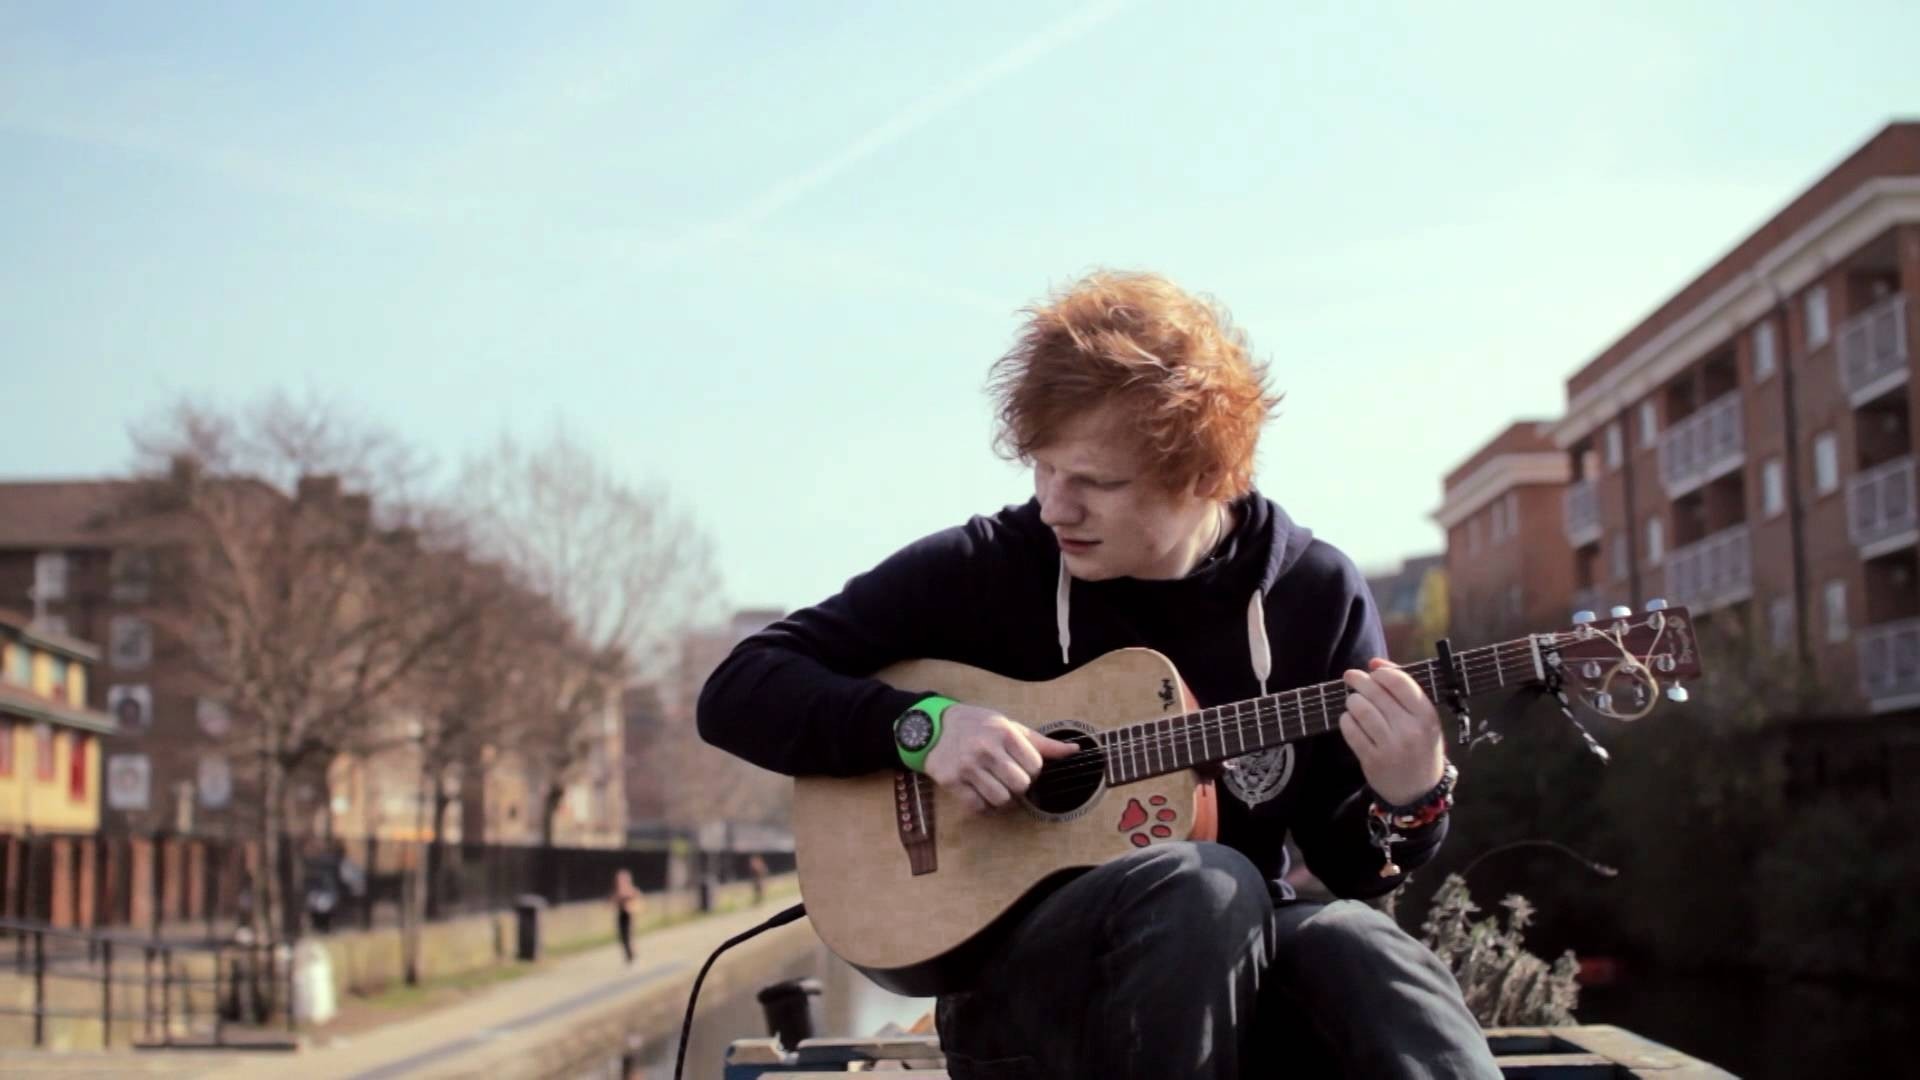 1920x1080 Ed Sheeran Wallpaper, Ed Sheeran is playing his guitar.